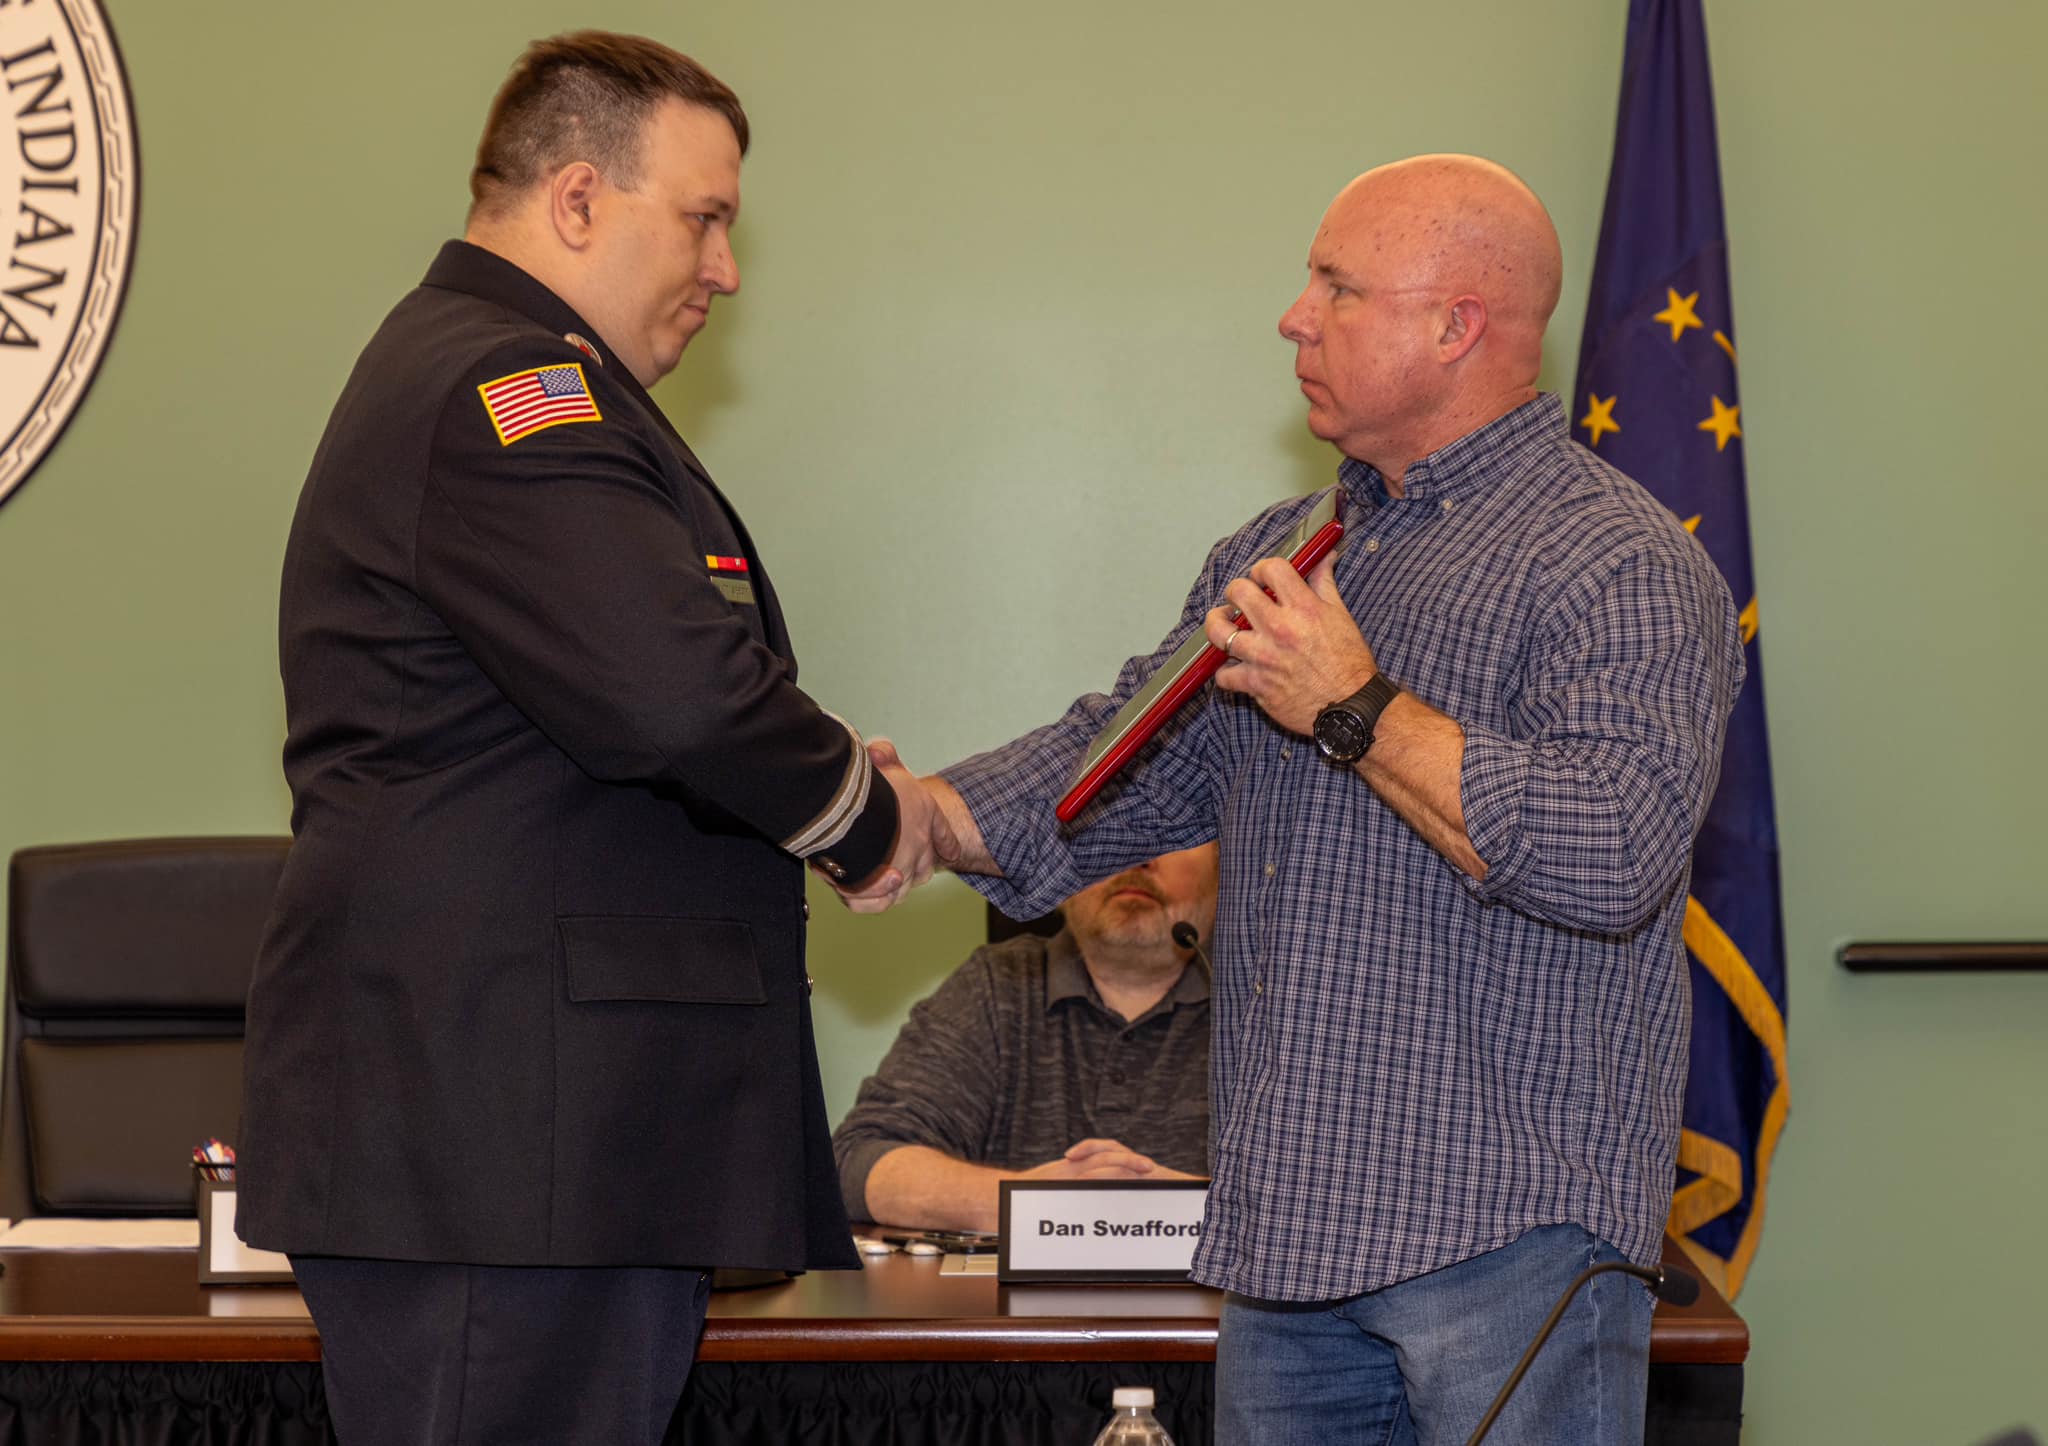 Ellettsville Fire Department Captain Siebott Awarded Distinguished Service Medal